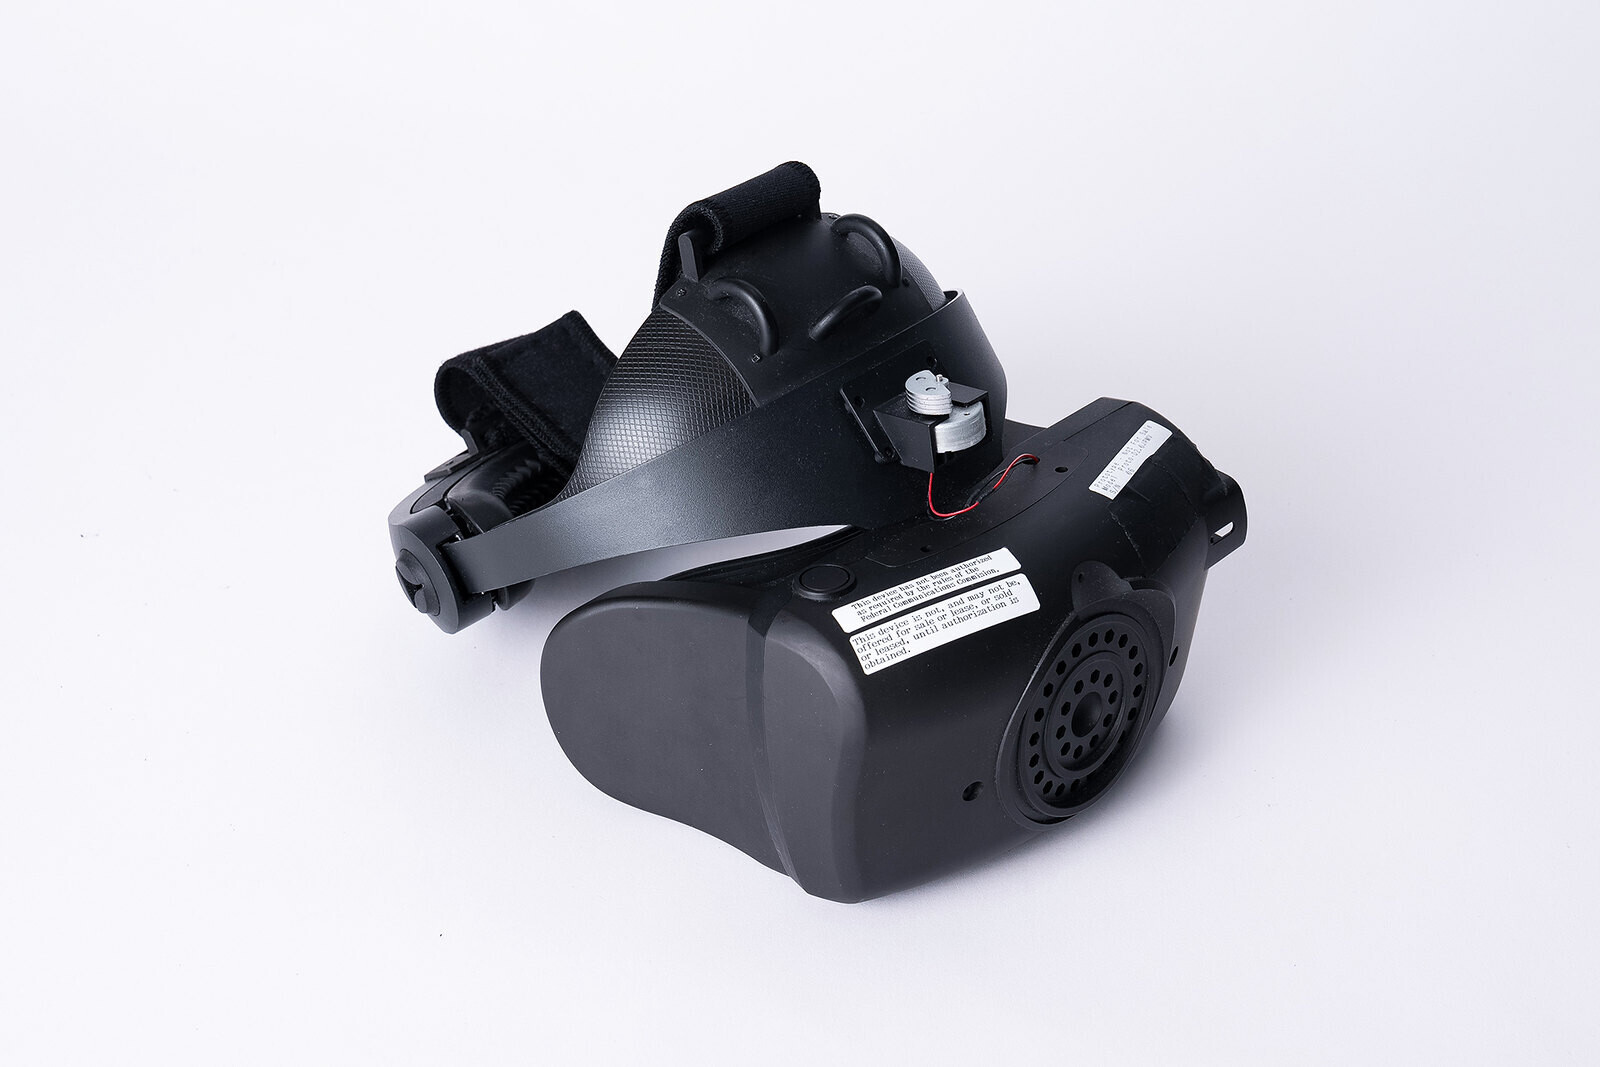  Sony Playstation 5 PSVR Headset Eye Tracking Evaluation 2 Prototype 